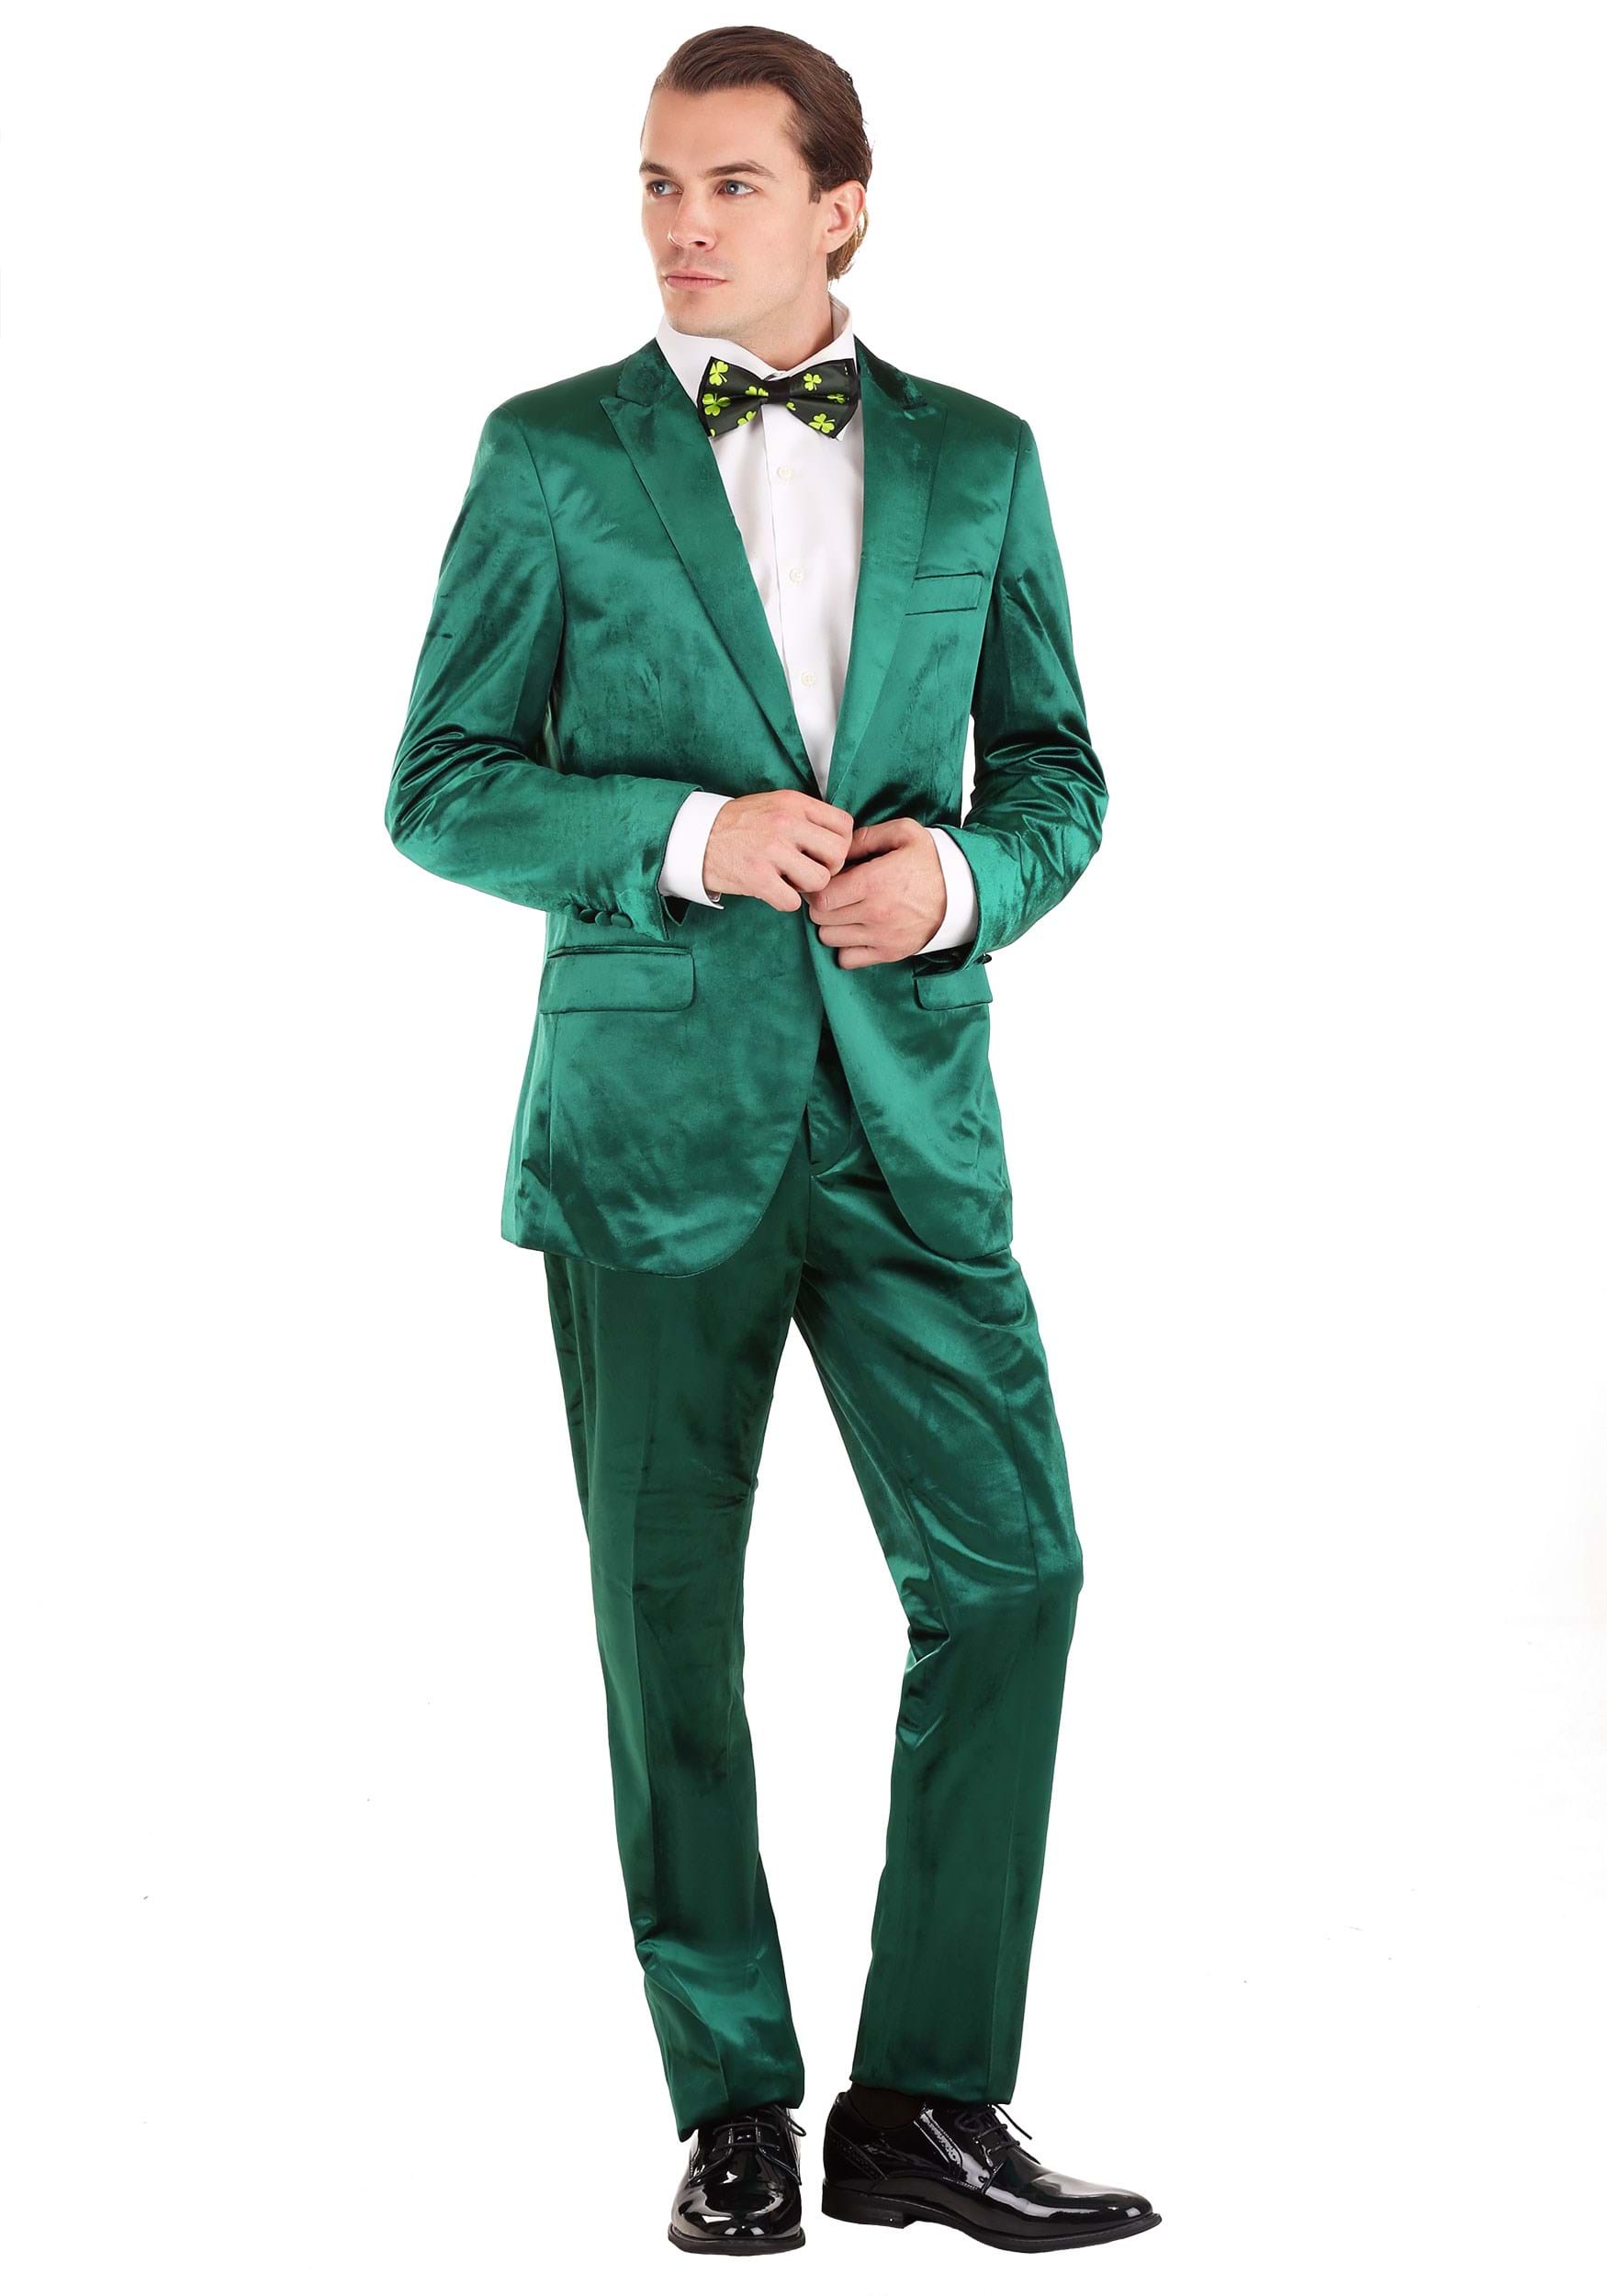 Men's Green Leprechaun Suit Costume - St. Patrick's Day